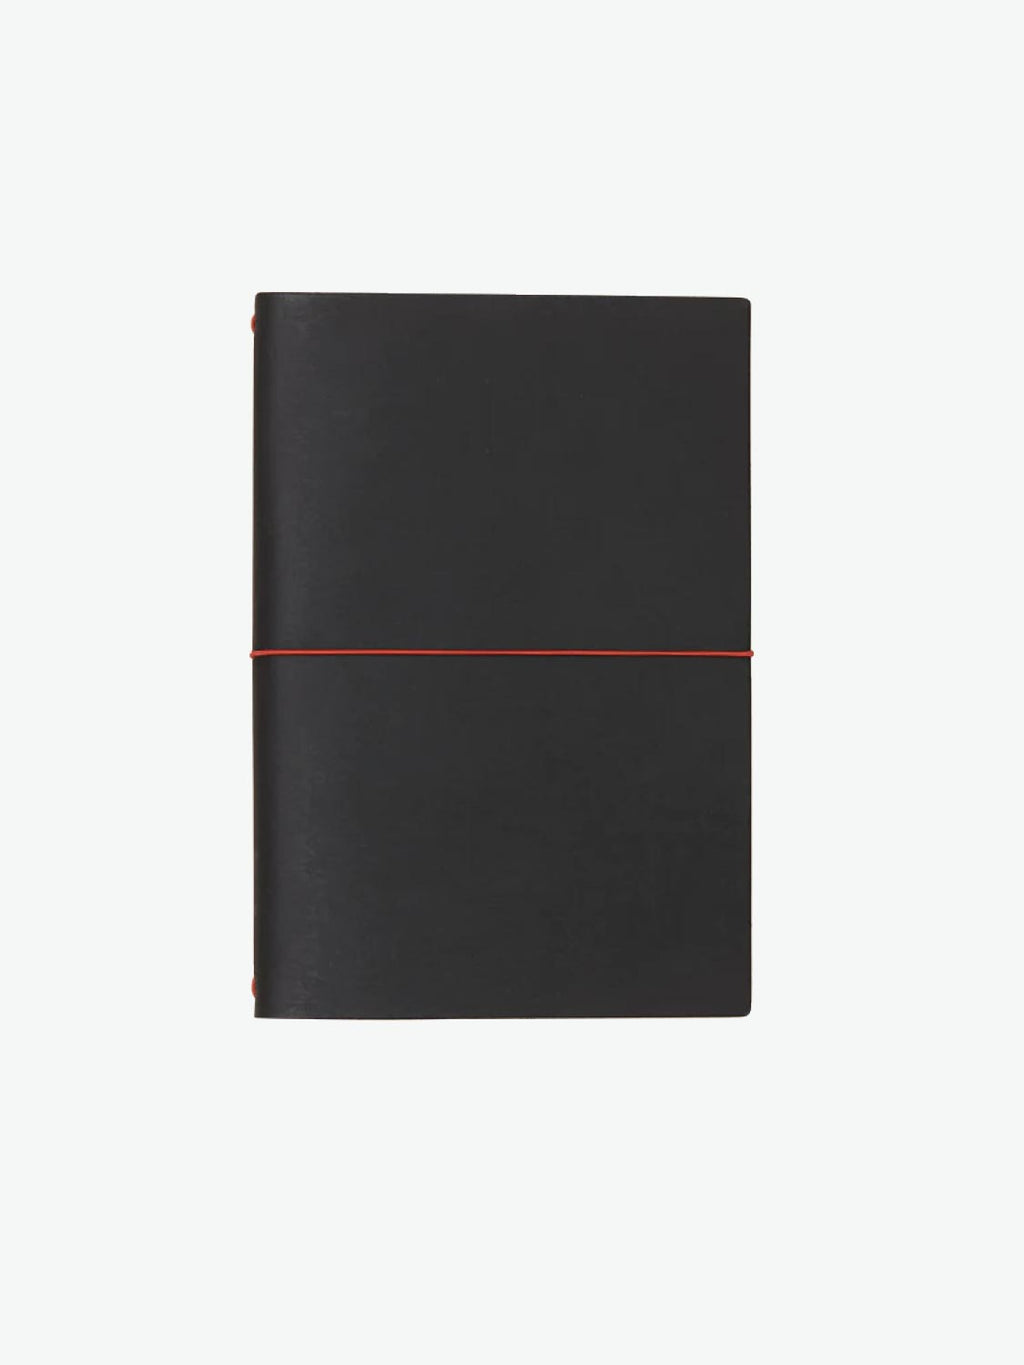 Paper Republic Grand Voyageur XL Leather Journal Black